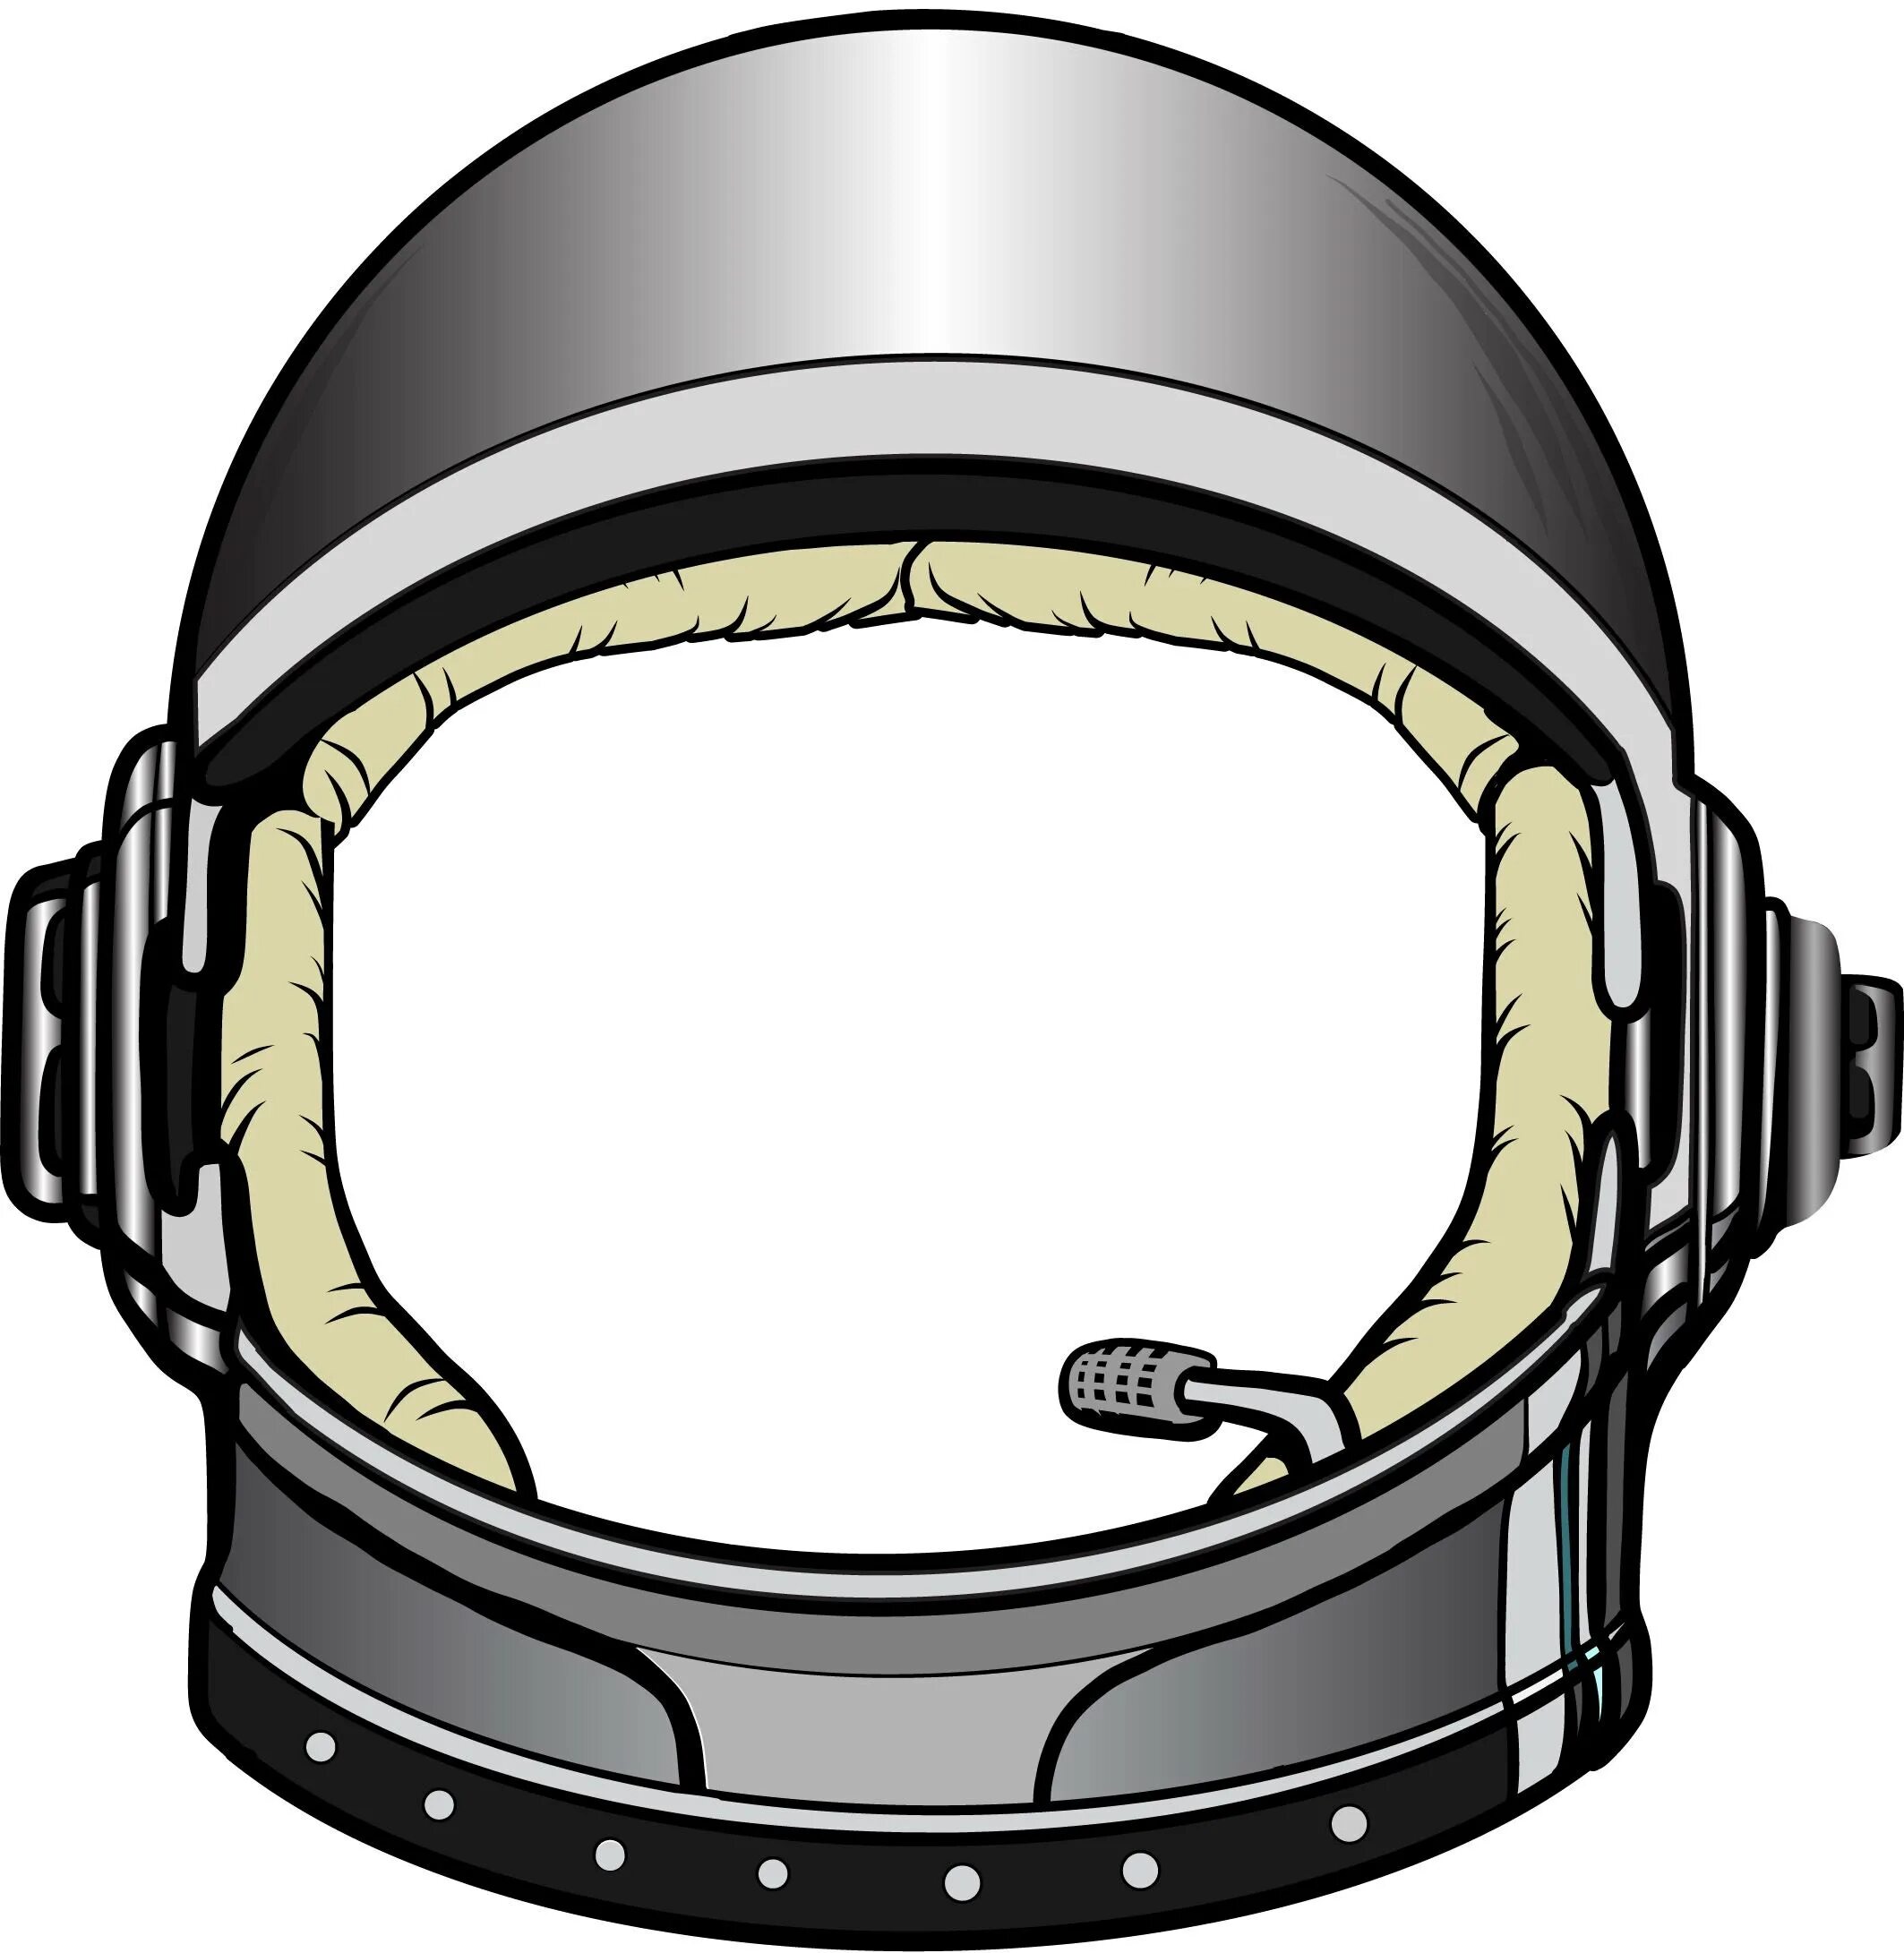 Шлем Astronaut Helmet. Шлем скафандра Космонавта. Шлем Космонавта SD IFI. Отражение в шлеме Космонавта сбоку.